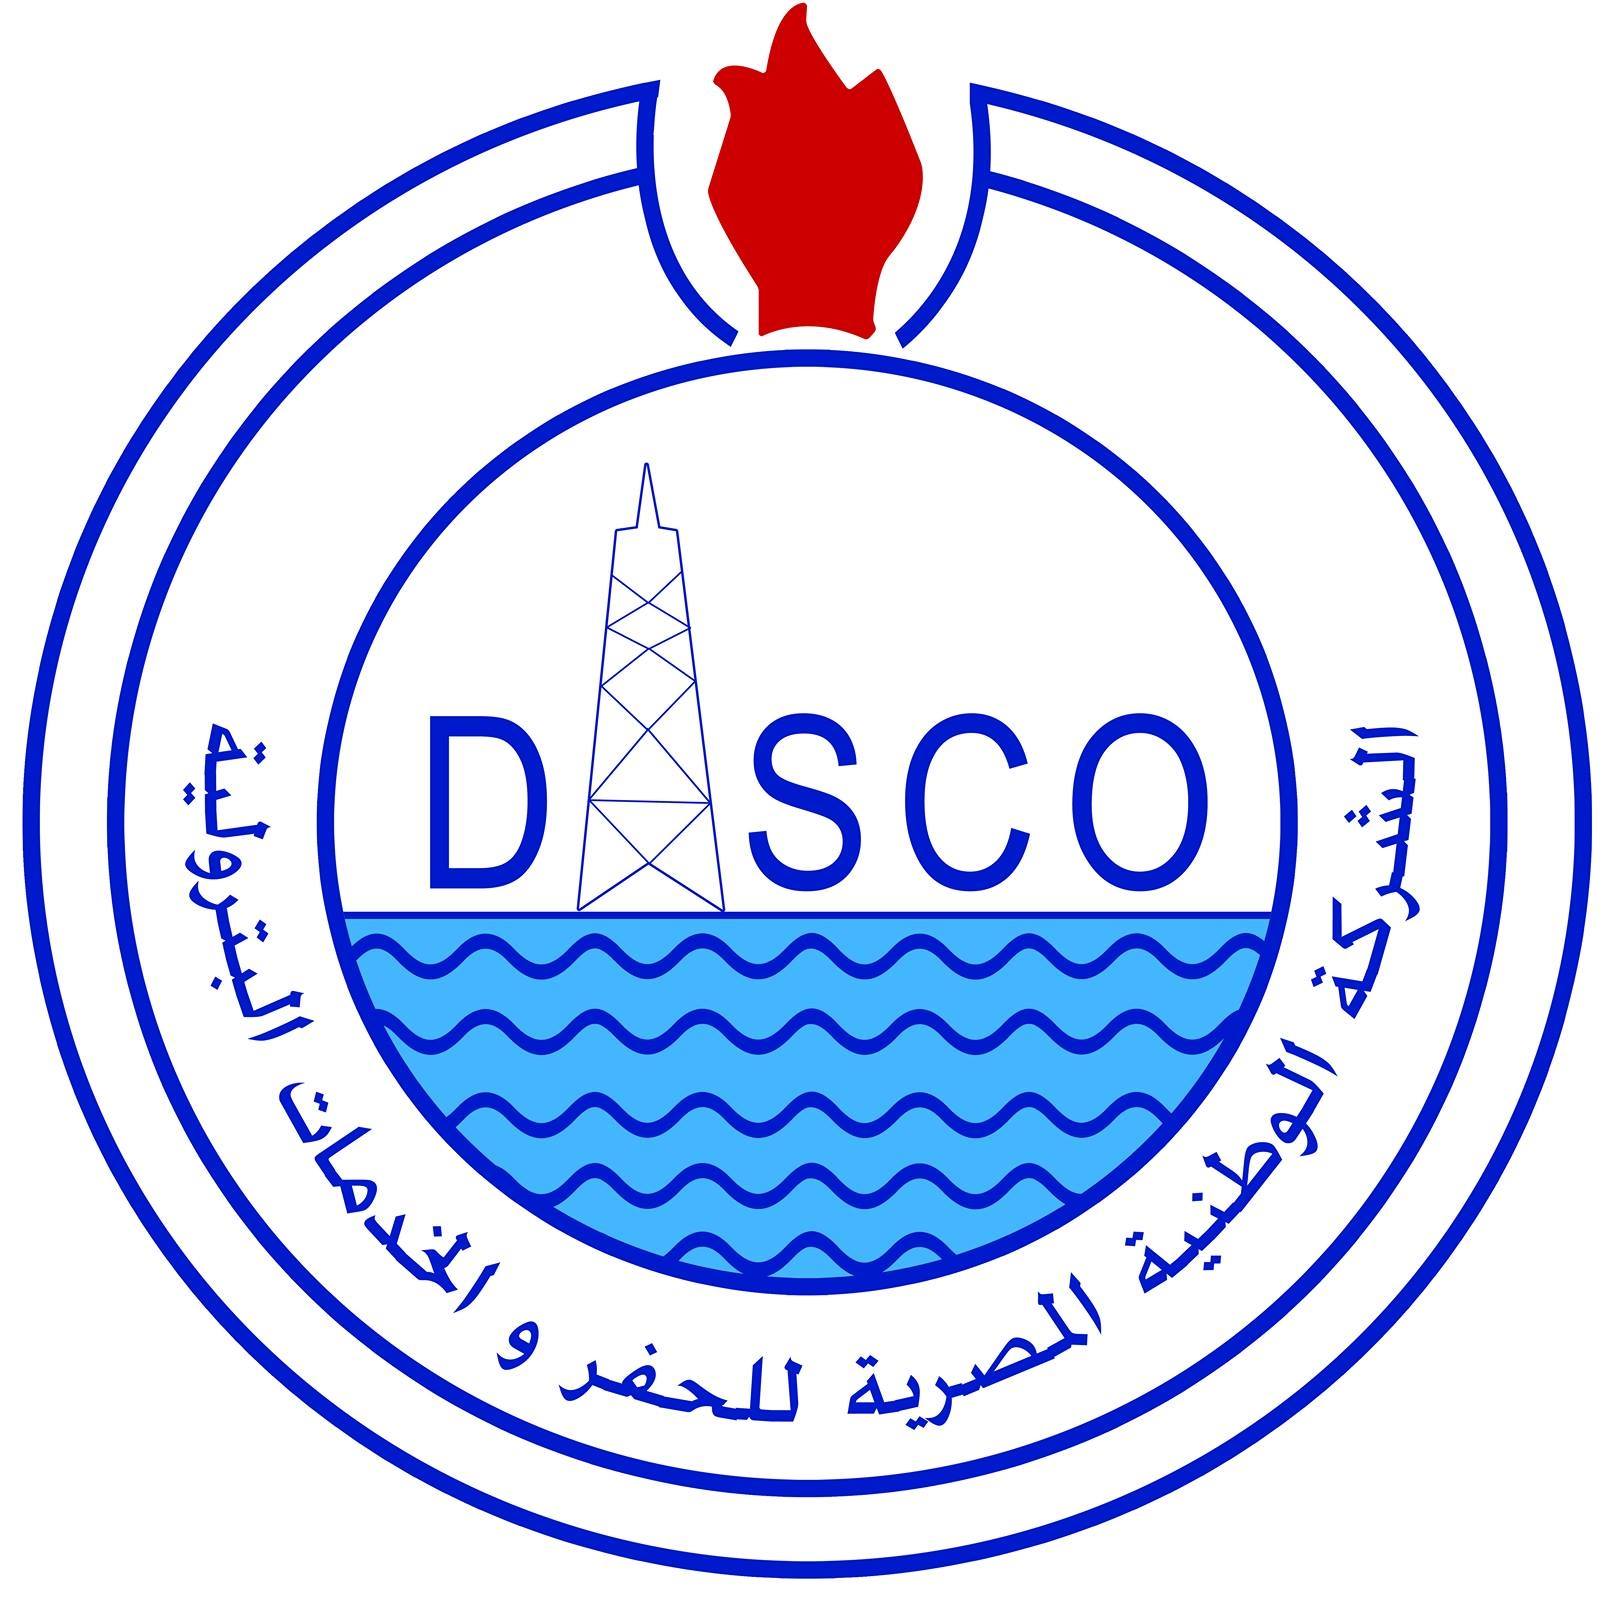 Dasco petroleum services